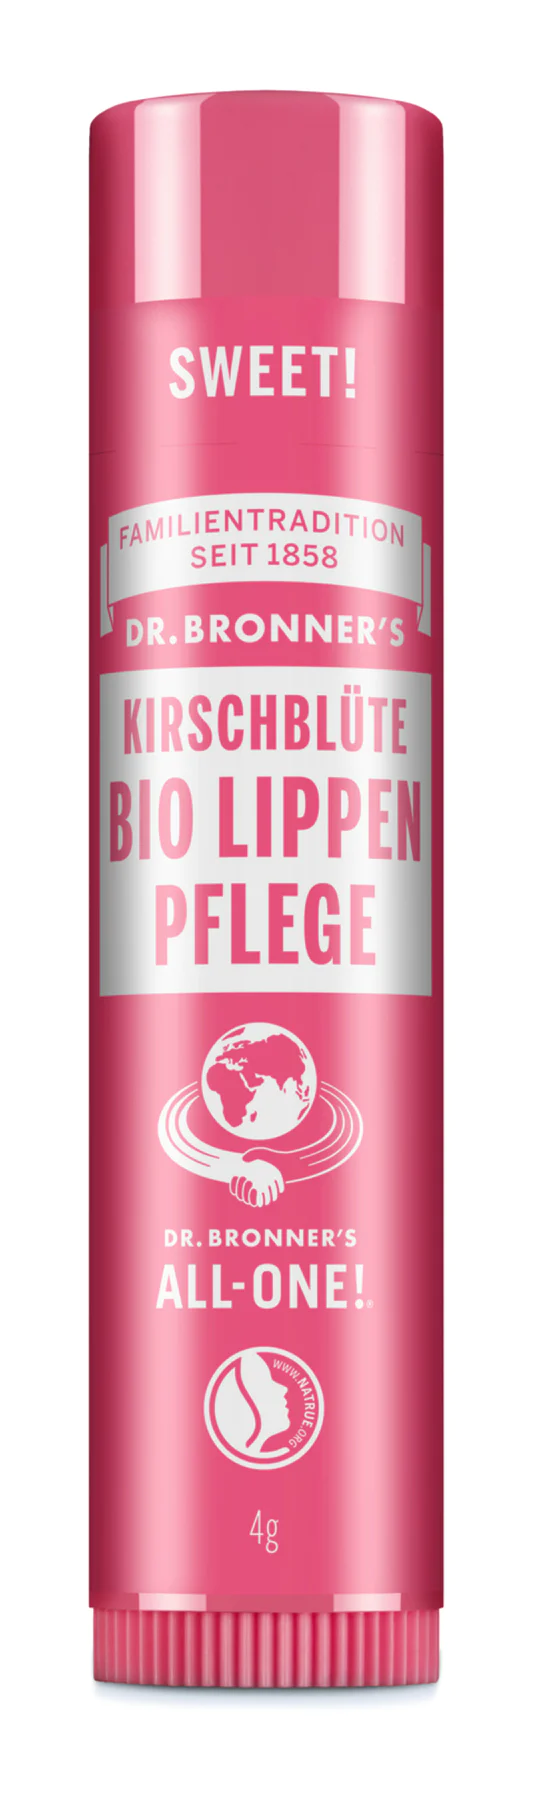 DR BRONNERS Bio Lippenpflege  Kirschblüte